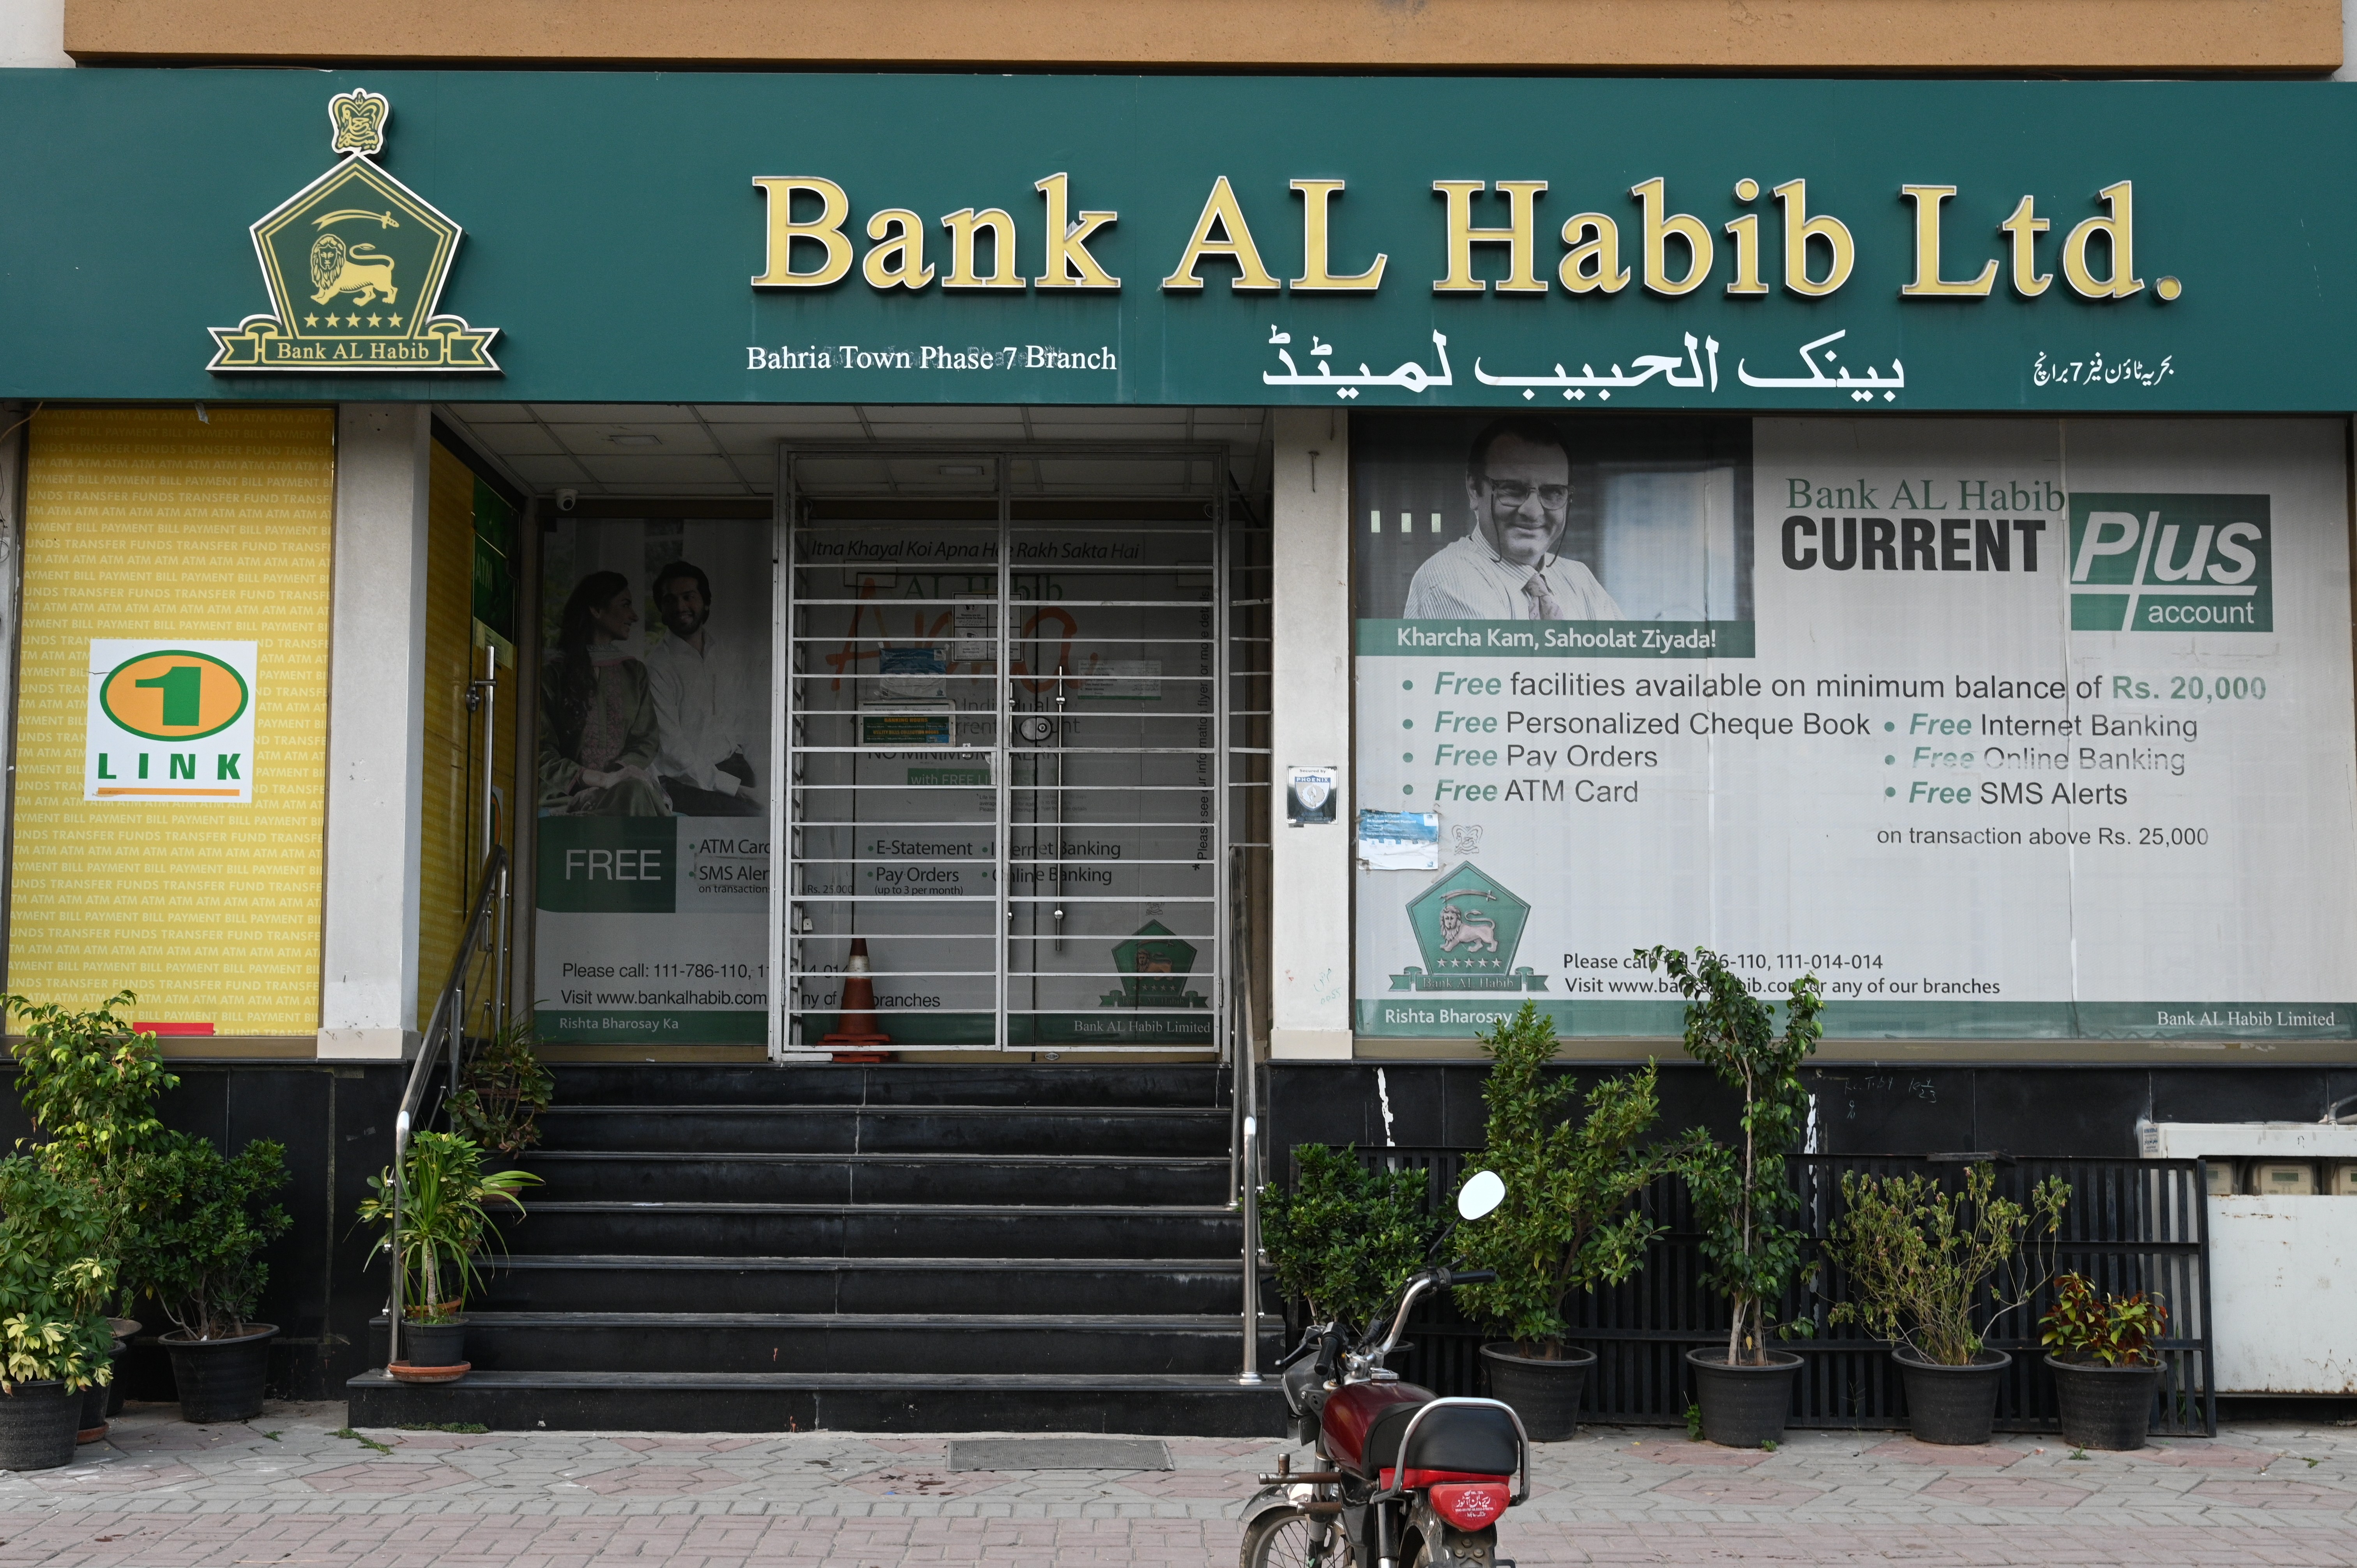 Bank AL Habib Ltd, Bahria Town Phase VII Branch